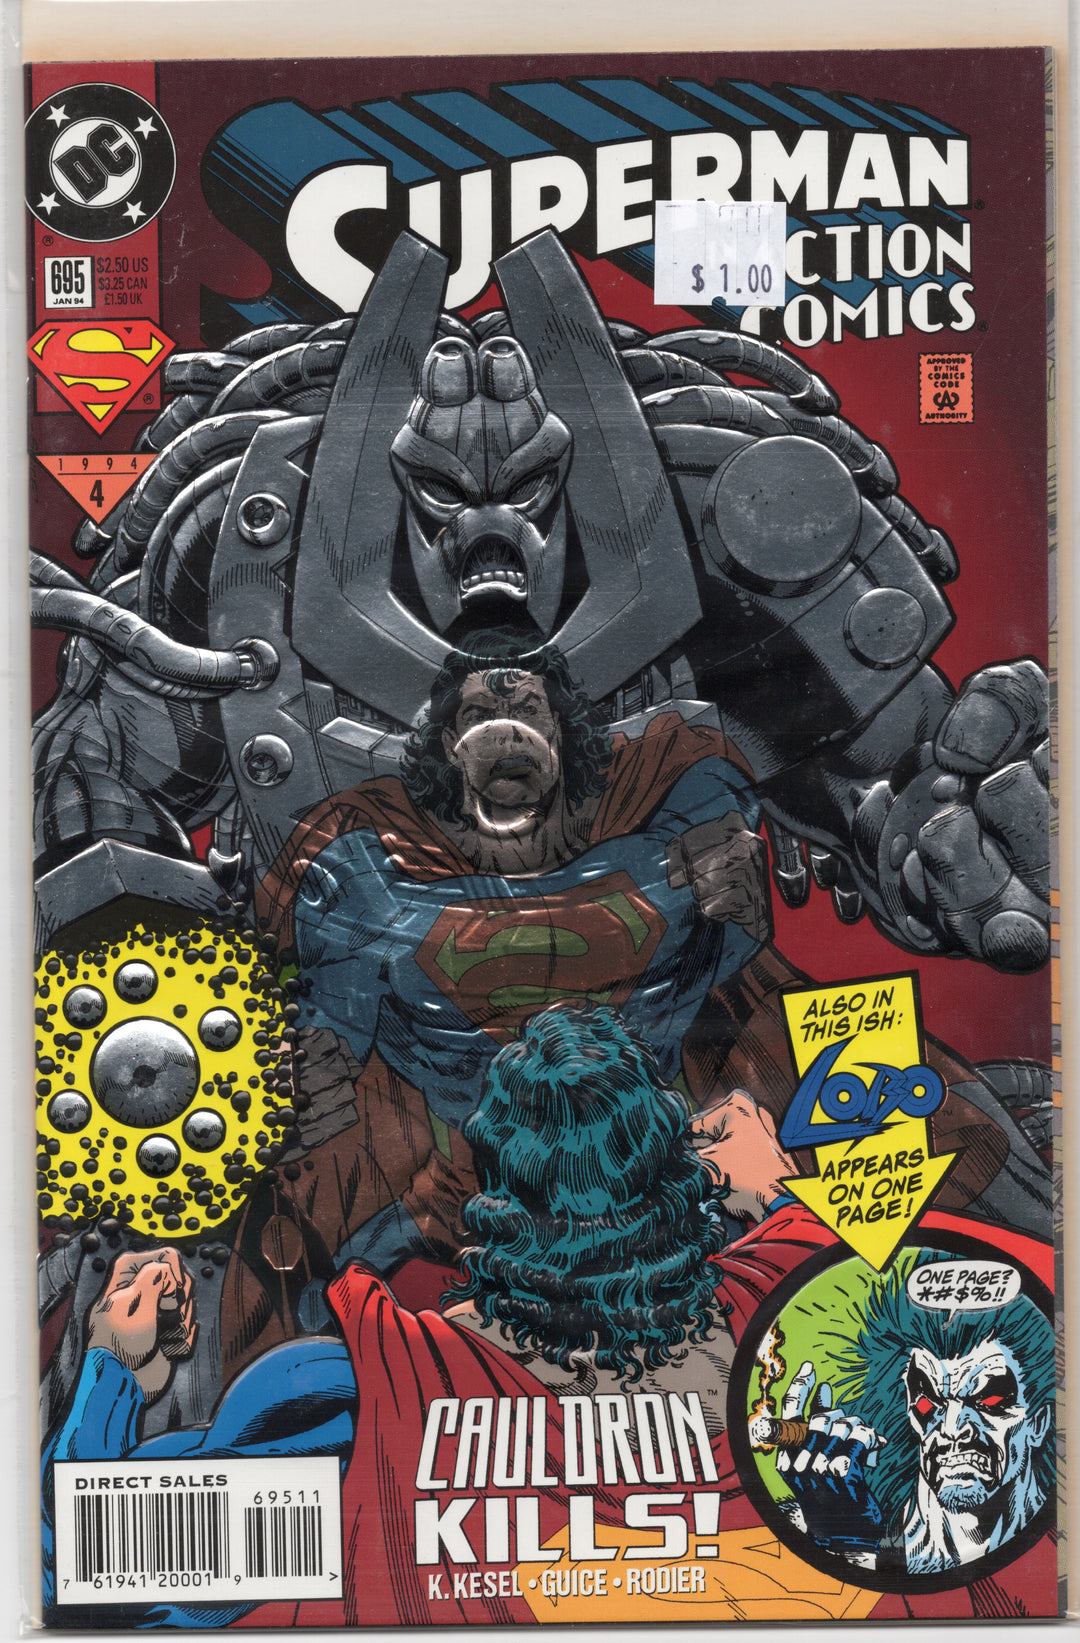 Superman Action Comics #695